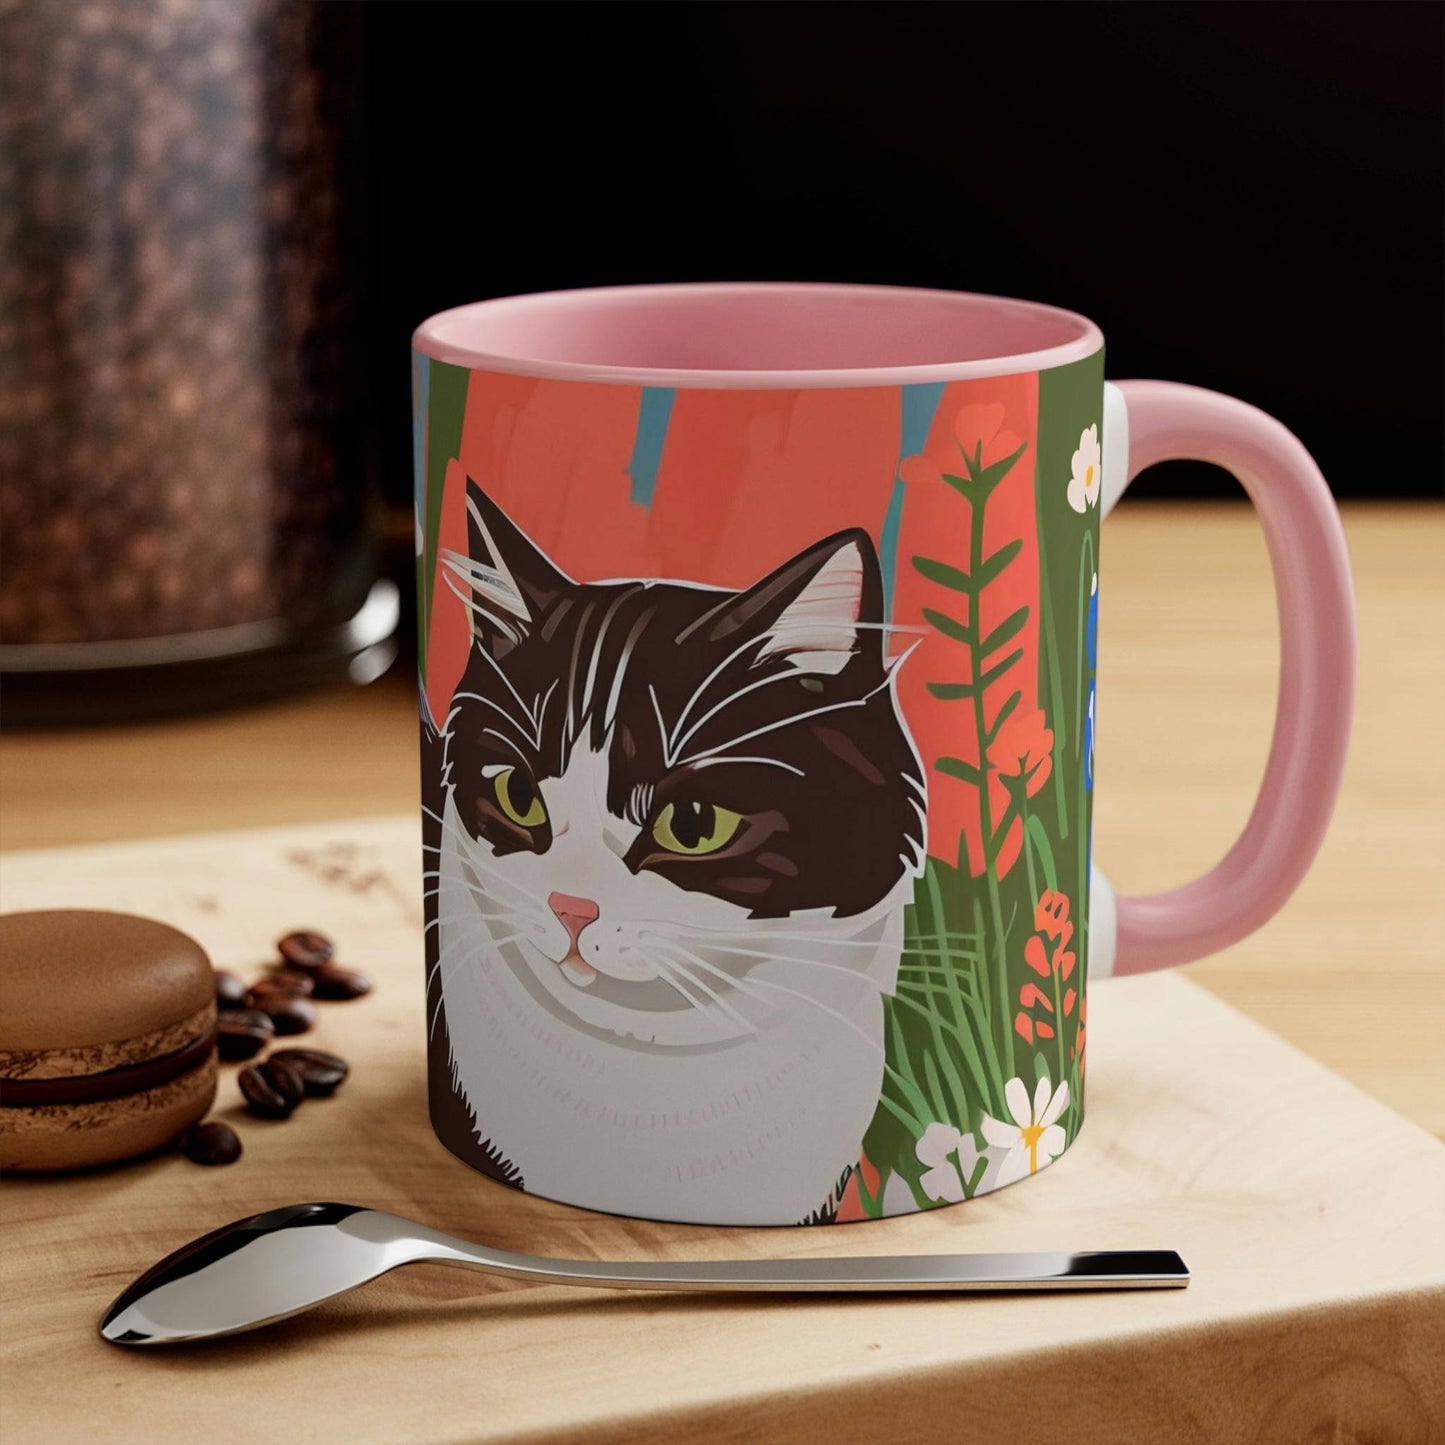 Ceramic Mug for Coffee, Tea, Hot Cocoa. Home/Office, Cat w Wildflowers